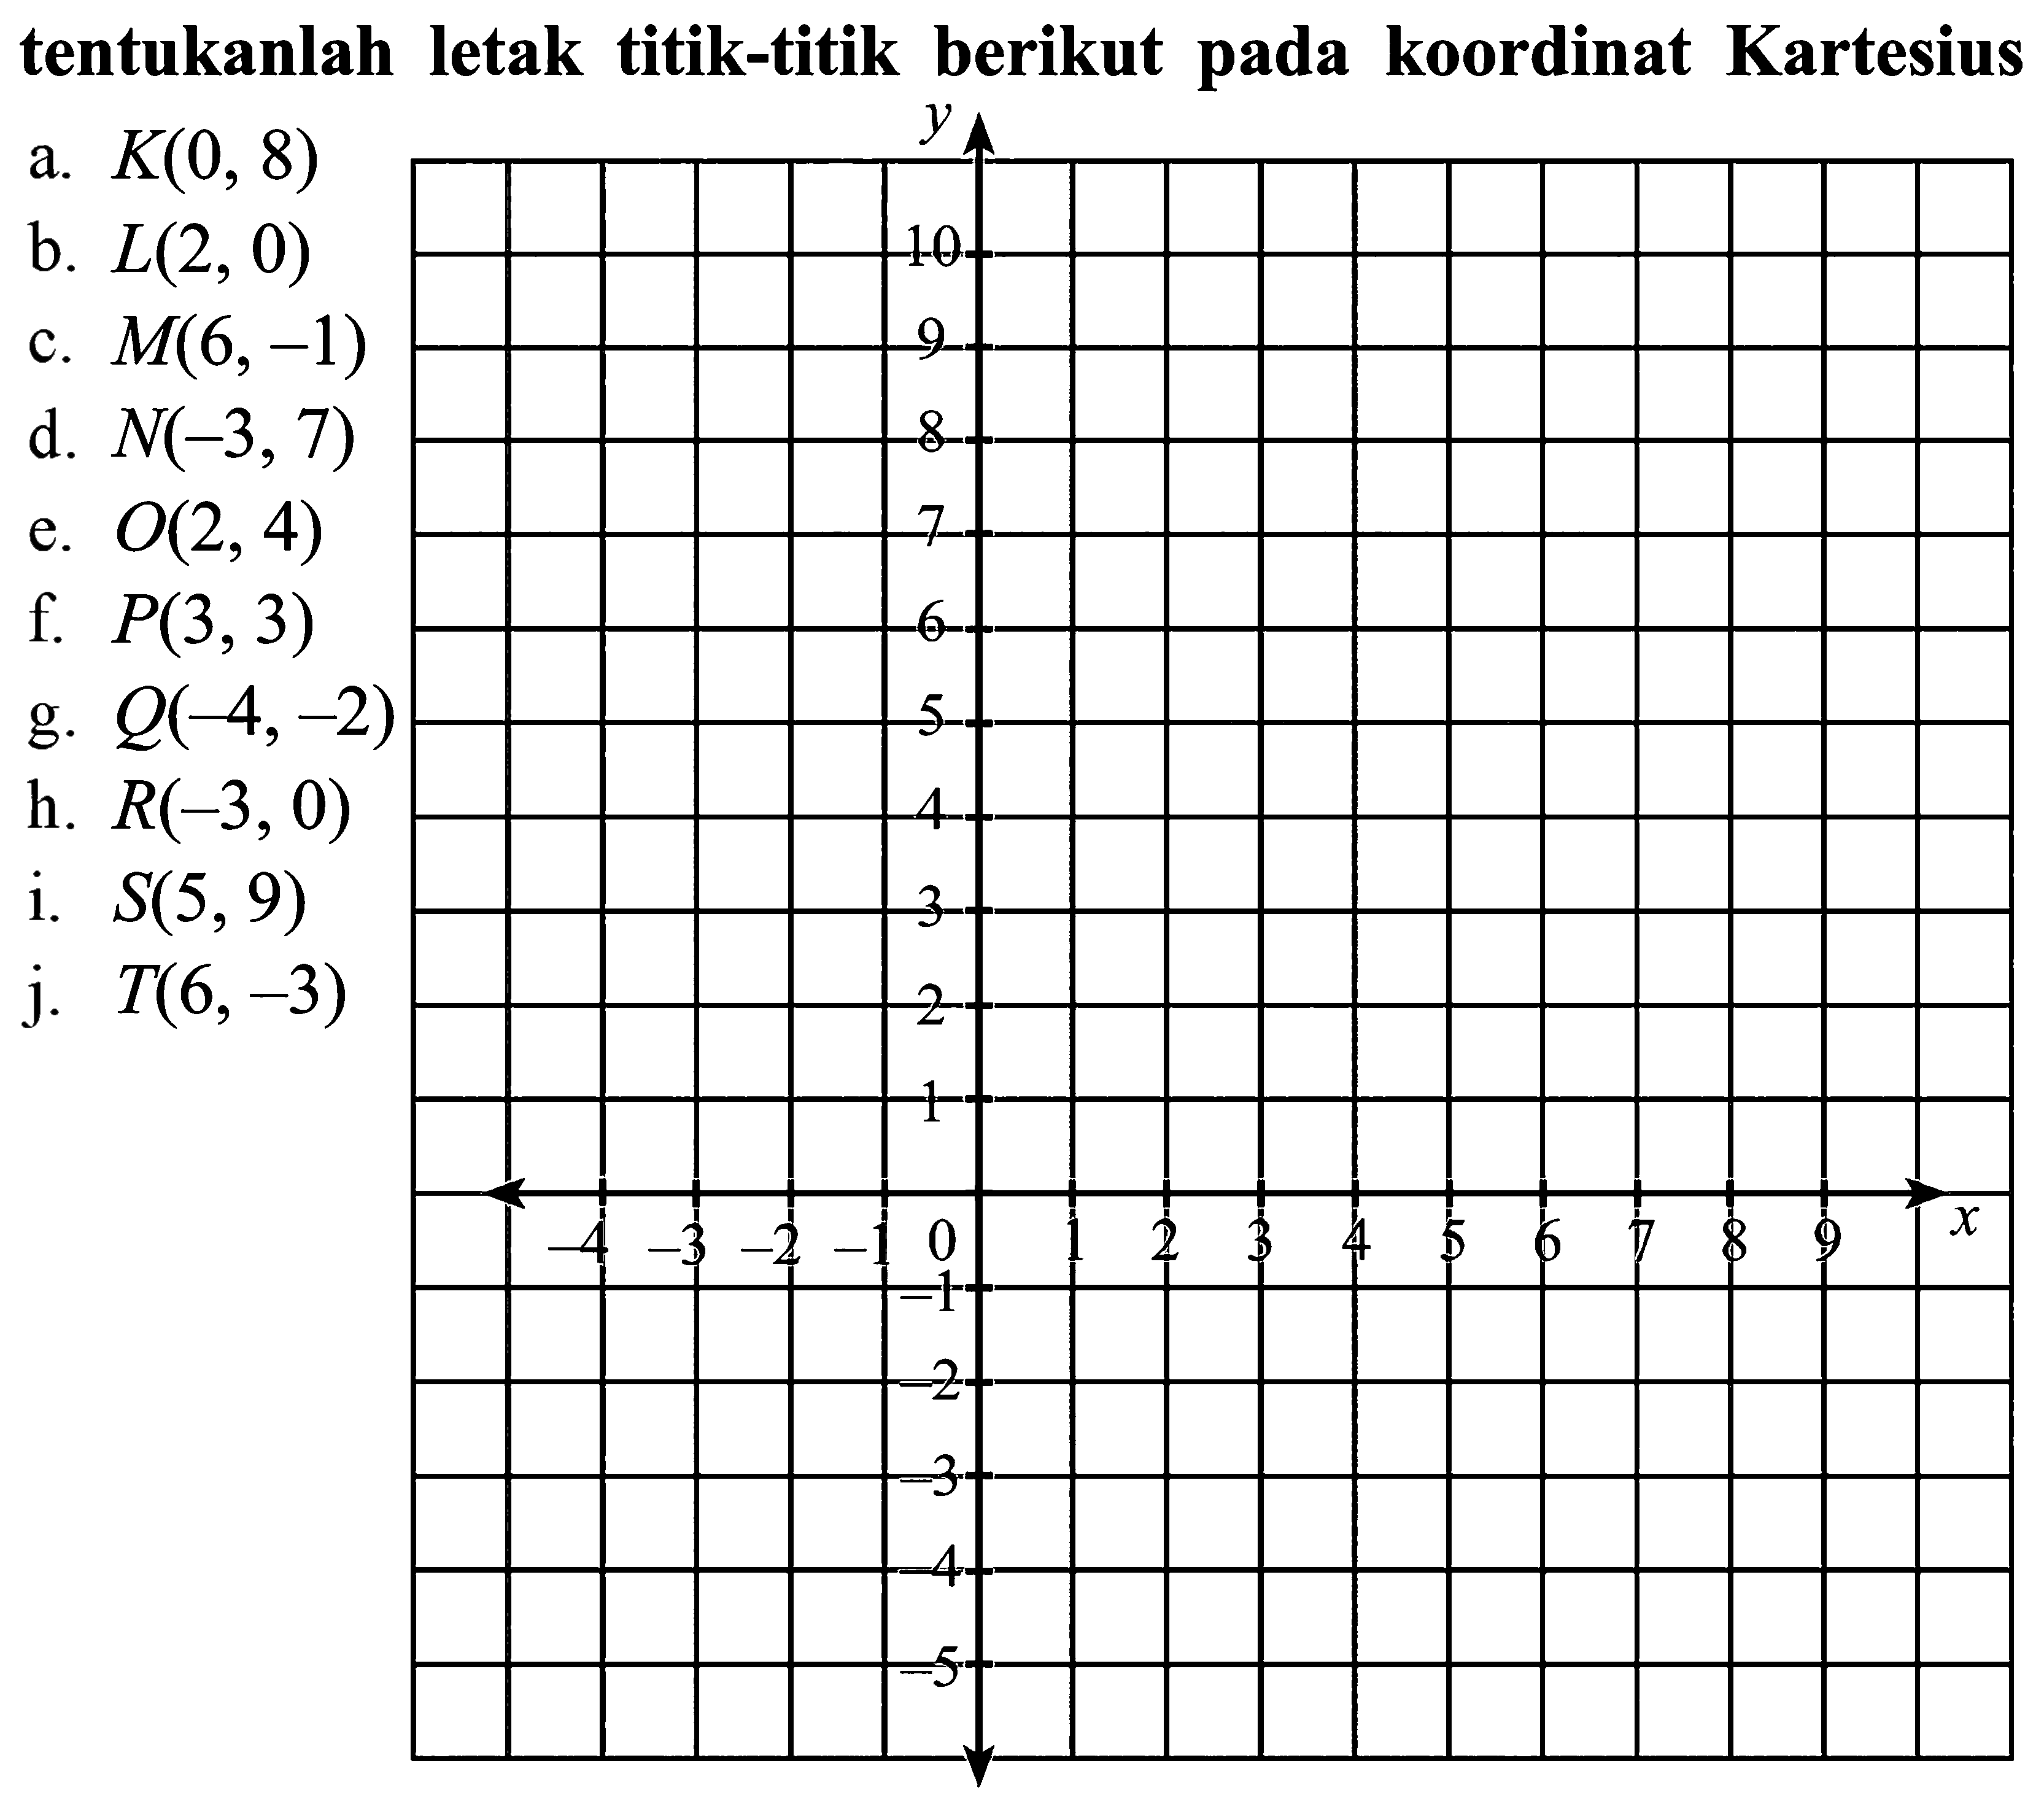 tentukanlah letak titik-titik berikut pada koordinat Kartesius a. K(0, 8) b. L(2, 0) c. M(6, -1) d. N(-3, 7) e. O(2, 4) f. P(3, 3) g. Q(-4, -2) h. R(-3, 0) i. S(5, 9) j. T(6, -3)